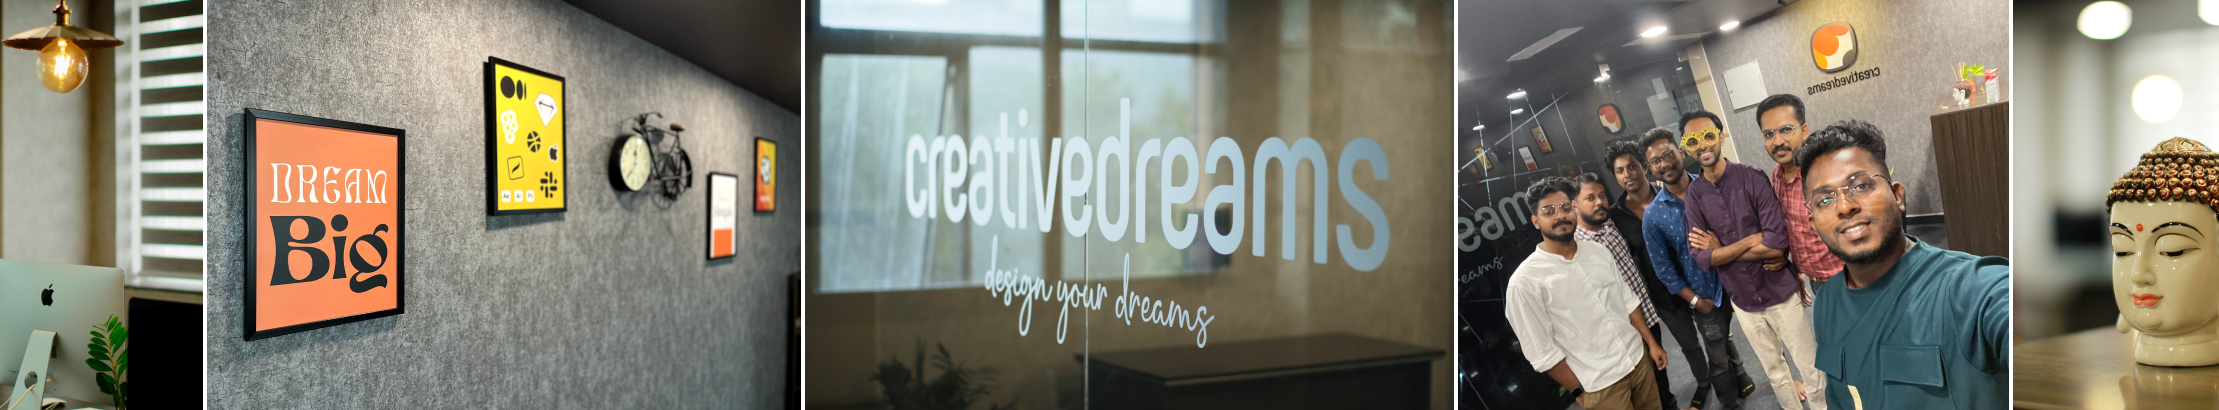 Profil-Banner von Creative Dreams